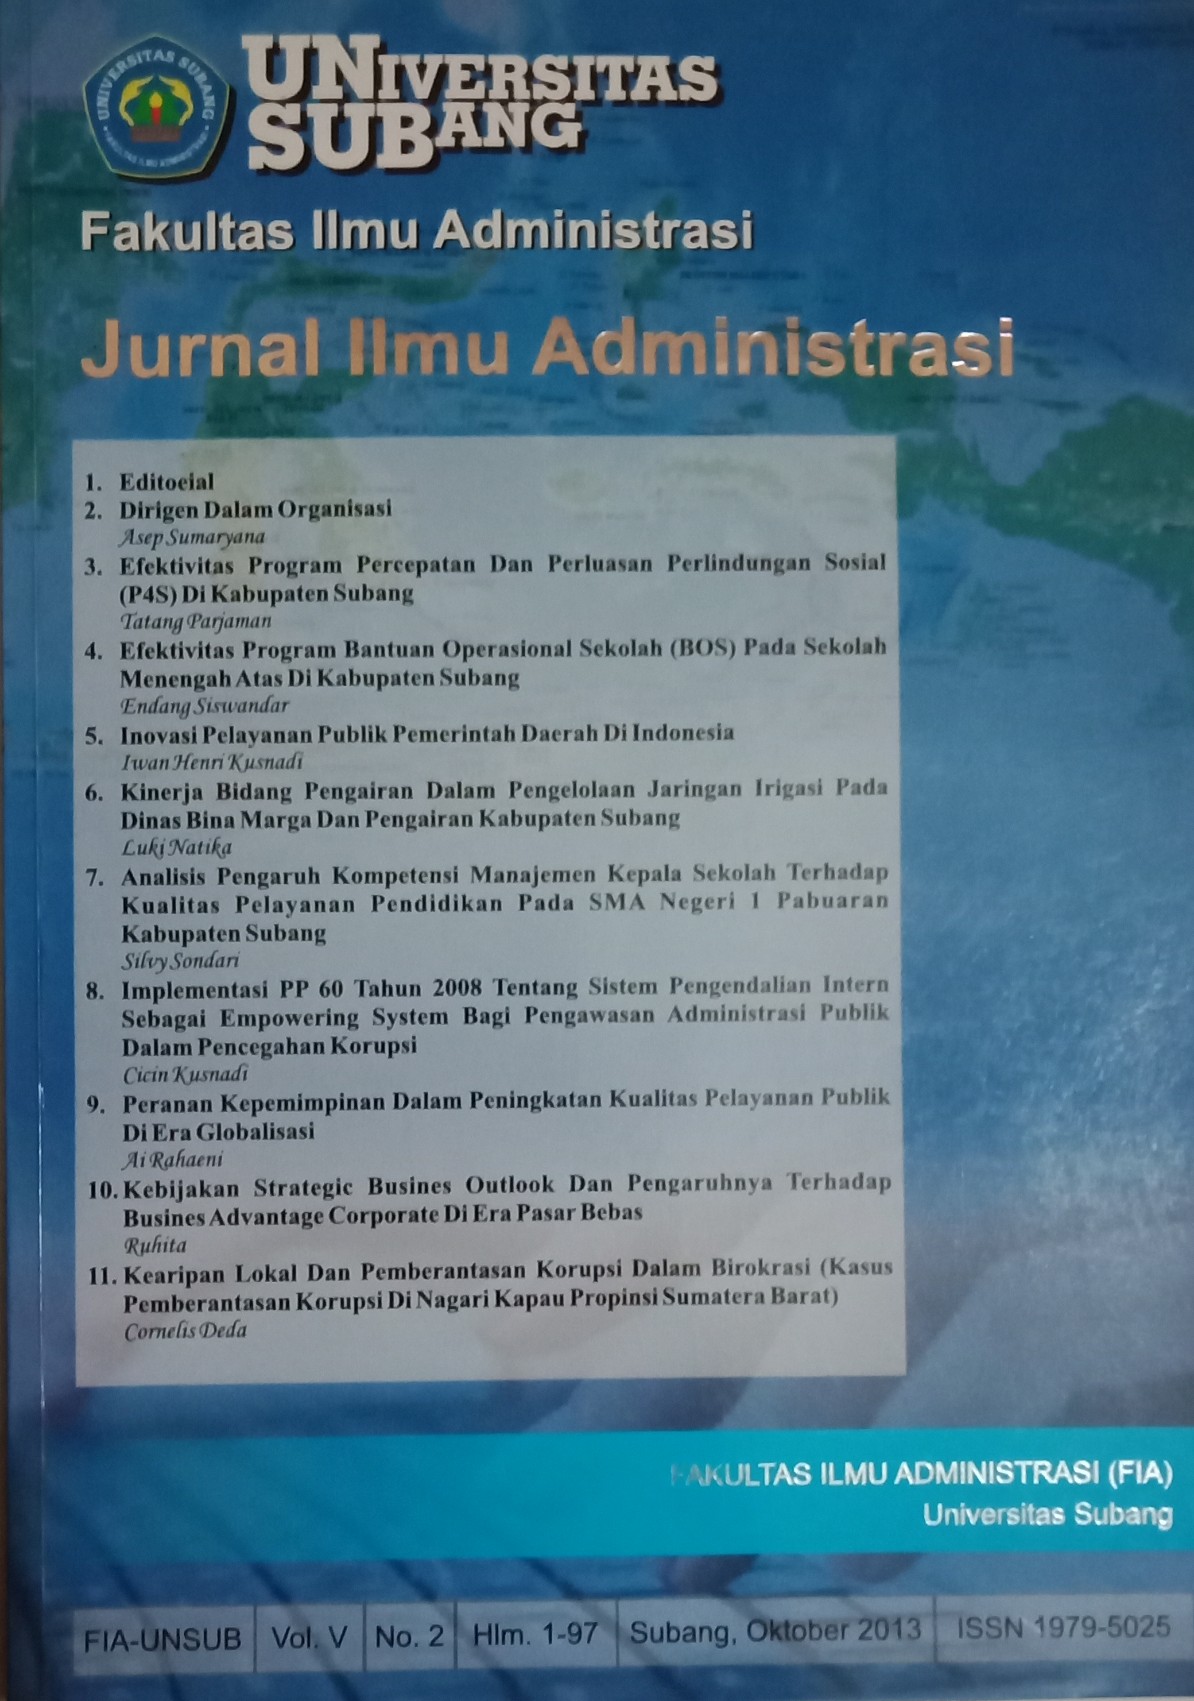 					View Vol. 5 No. 2 (2013): JIA : JURNAL ILMU ADMINISTRASI
				